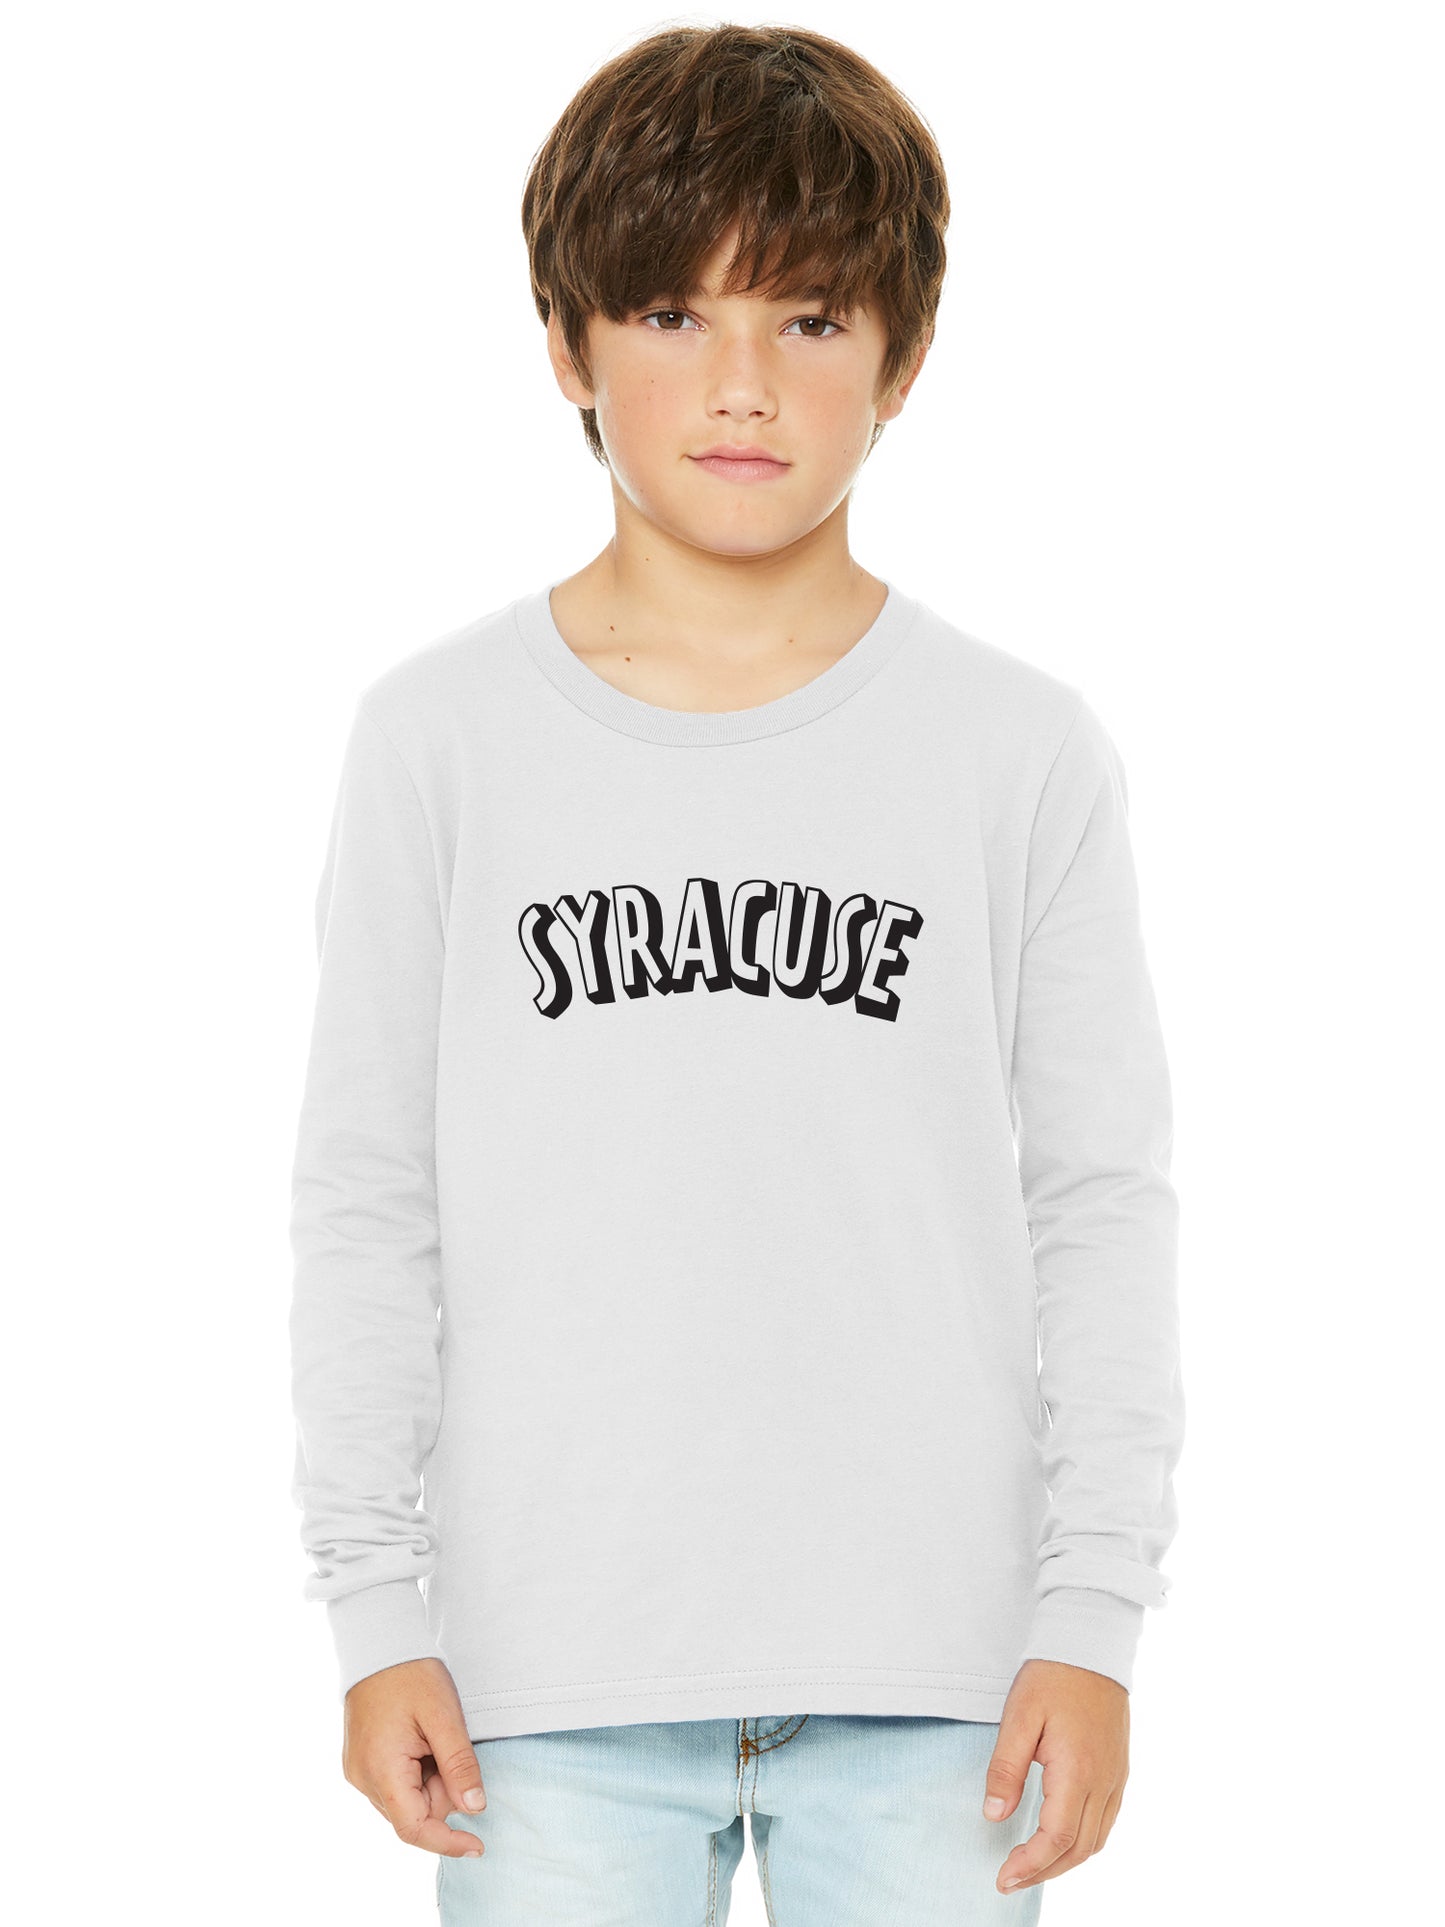 Daxton Youth Long Sleeve Syracuse Basic Tshirt